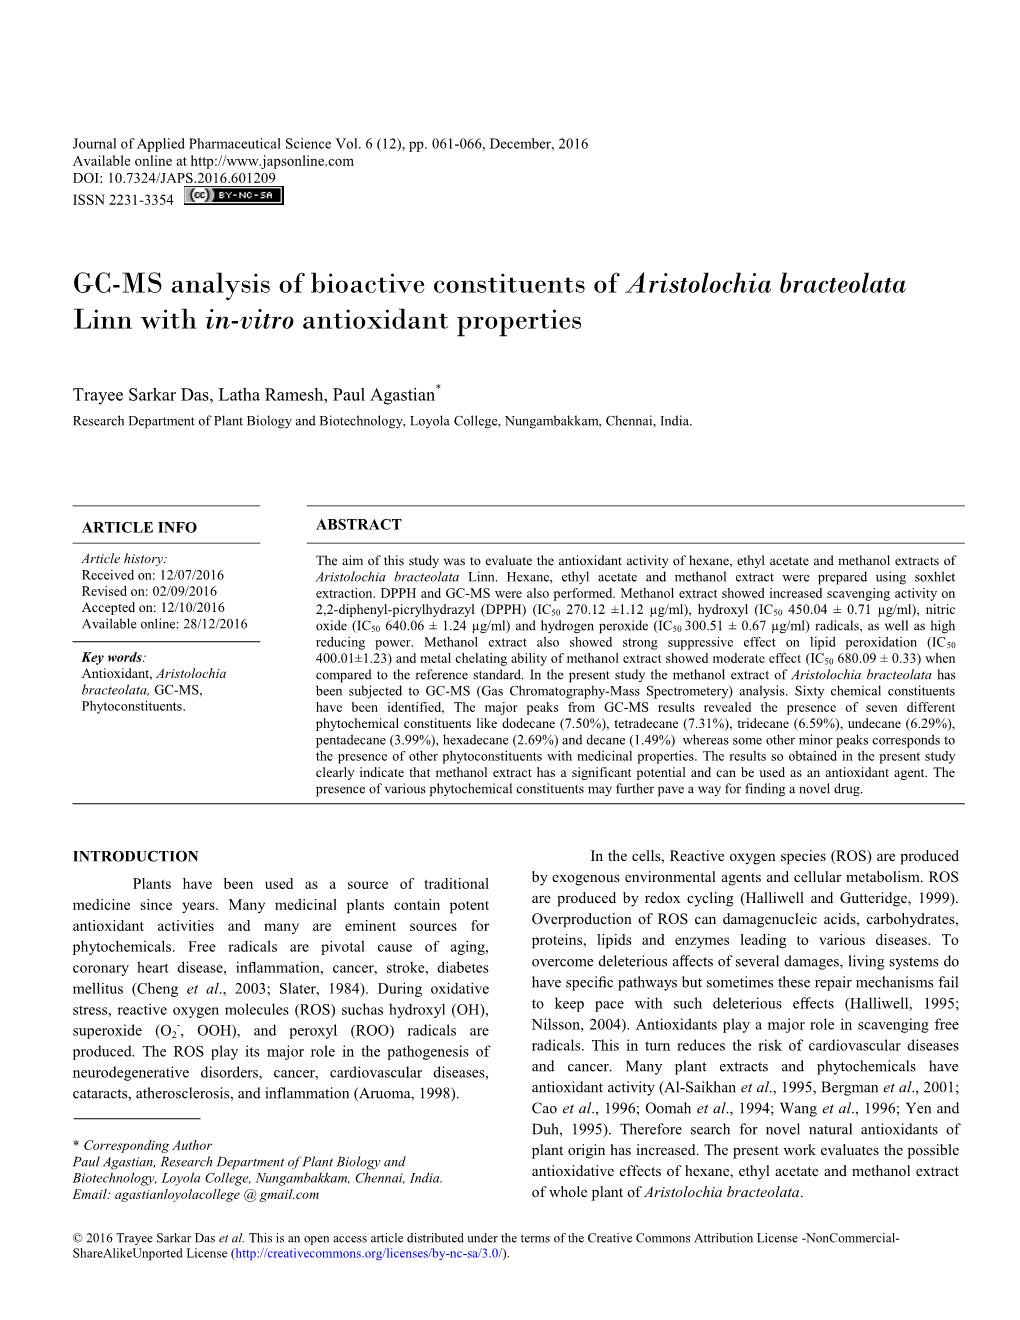 GC-MS Analysis of Bioactive Constituents of Aristolochia Bracteolata Linn with In-Vitro Antioxidant Properties